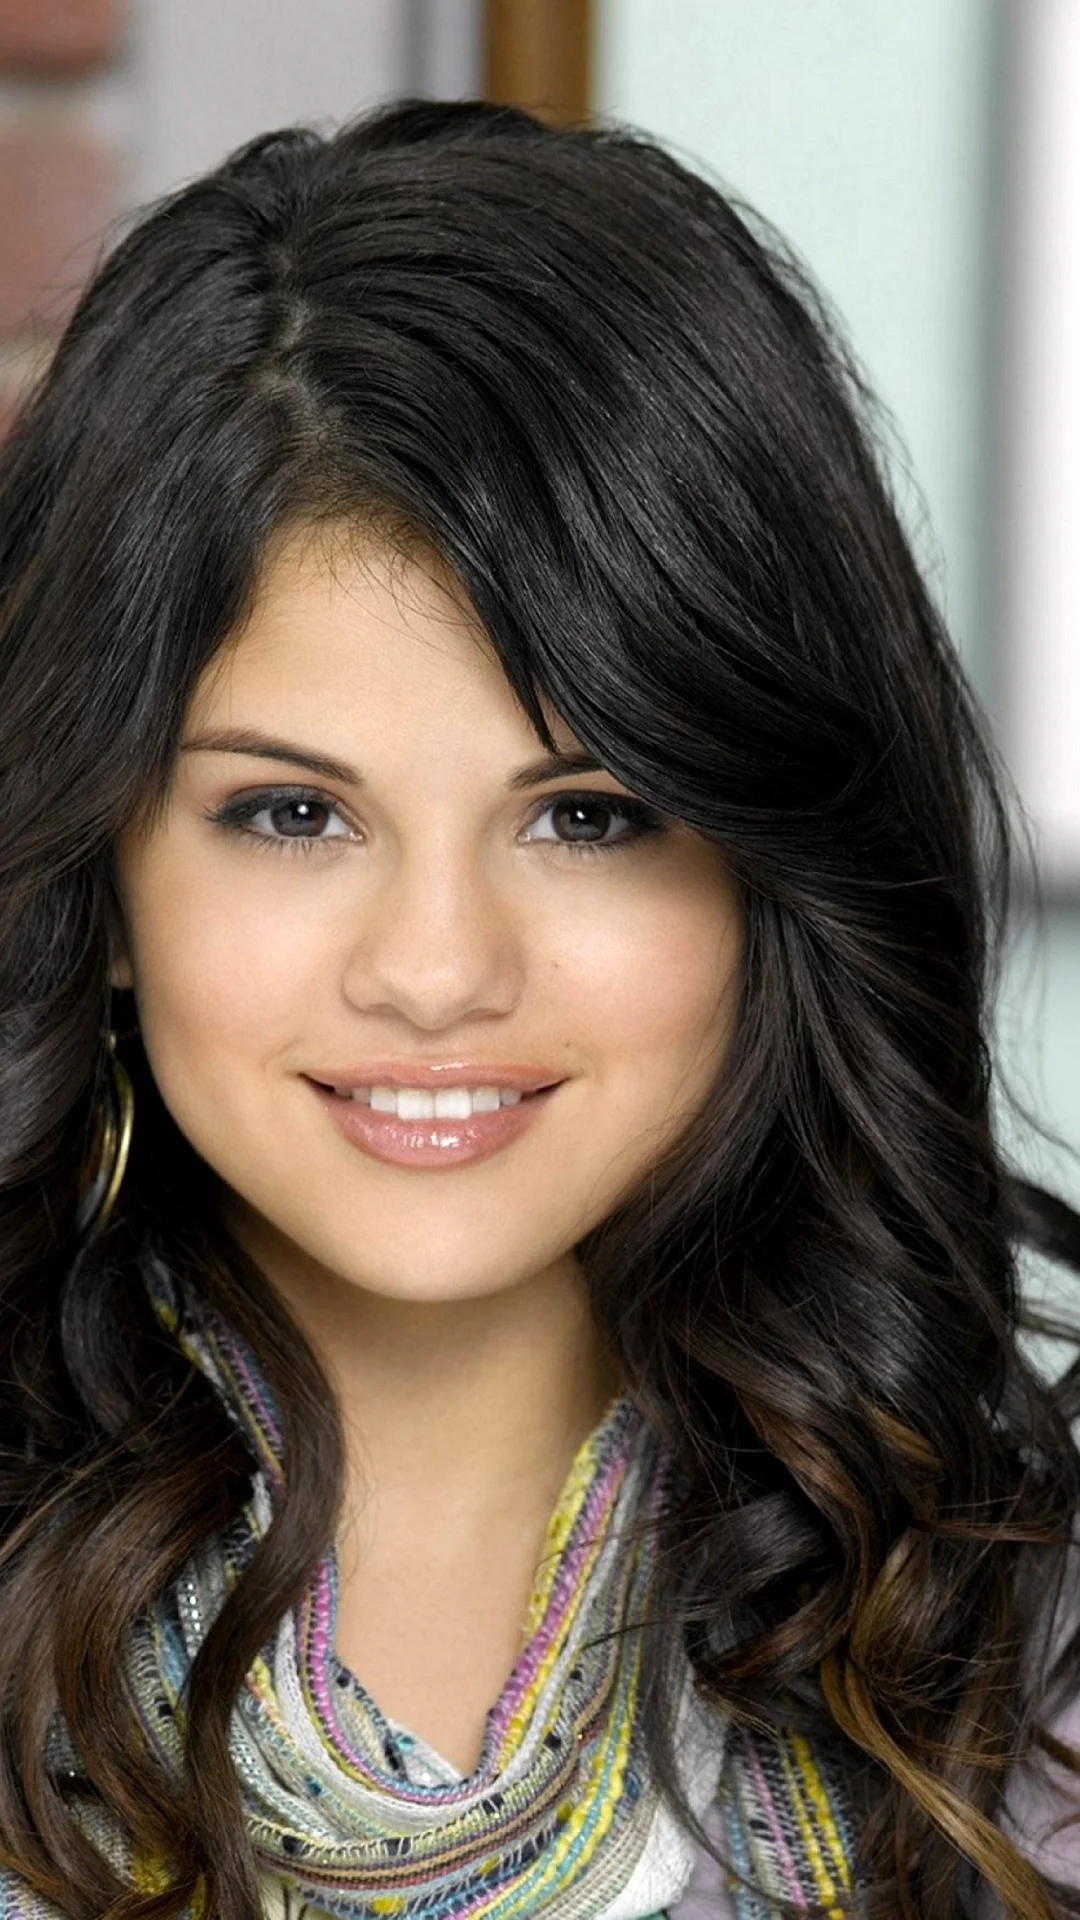 Selena Gomez Smile Wallpaper For iPhone